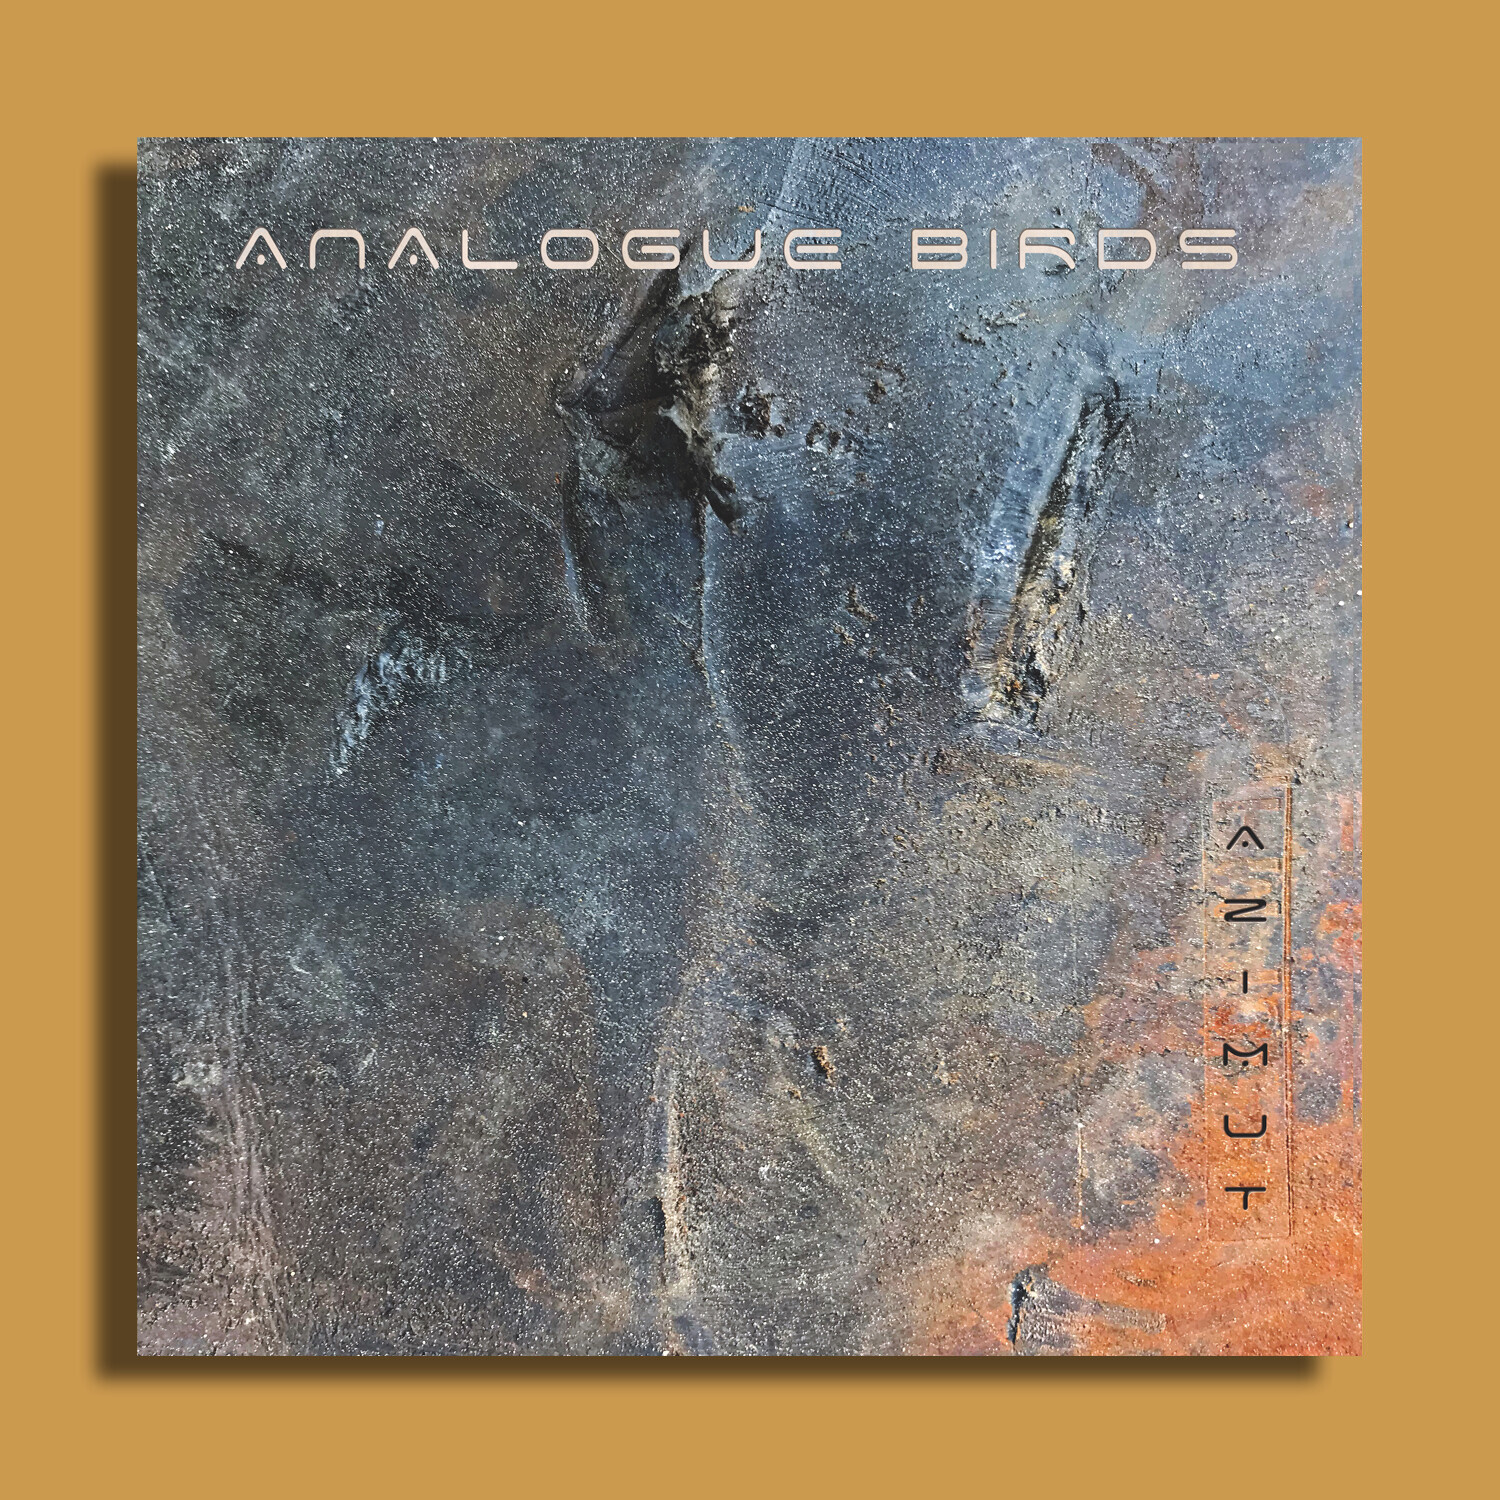 Vinyl 140g Analogue Birds Limited Edition  